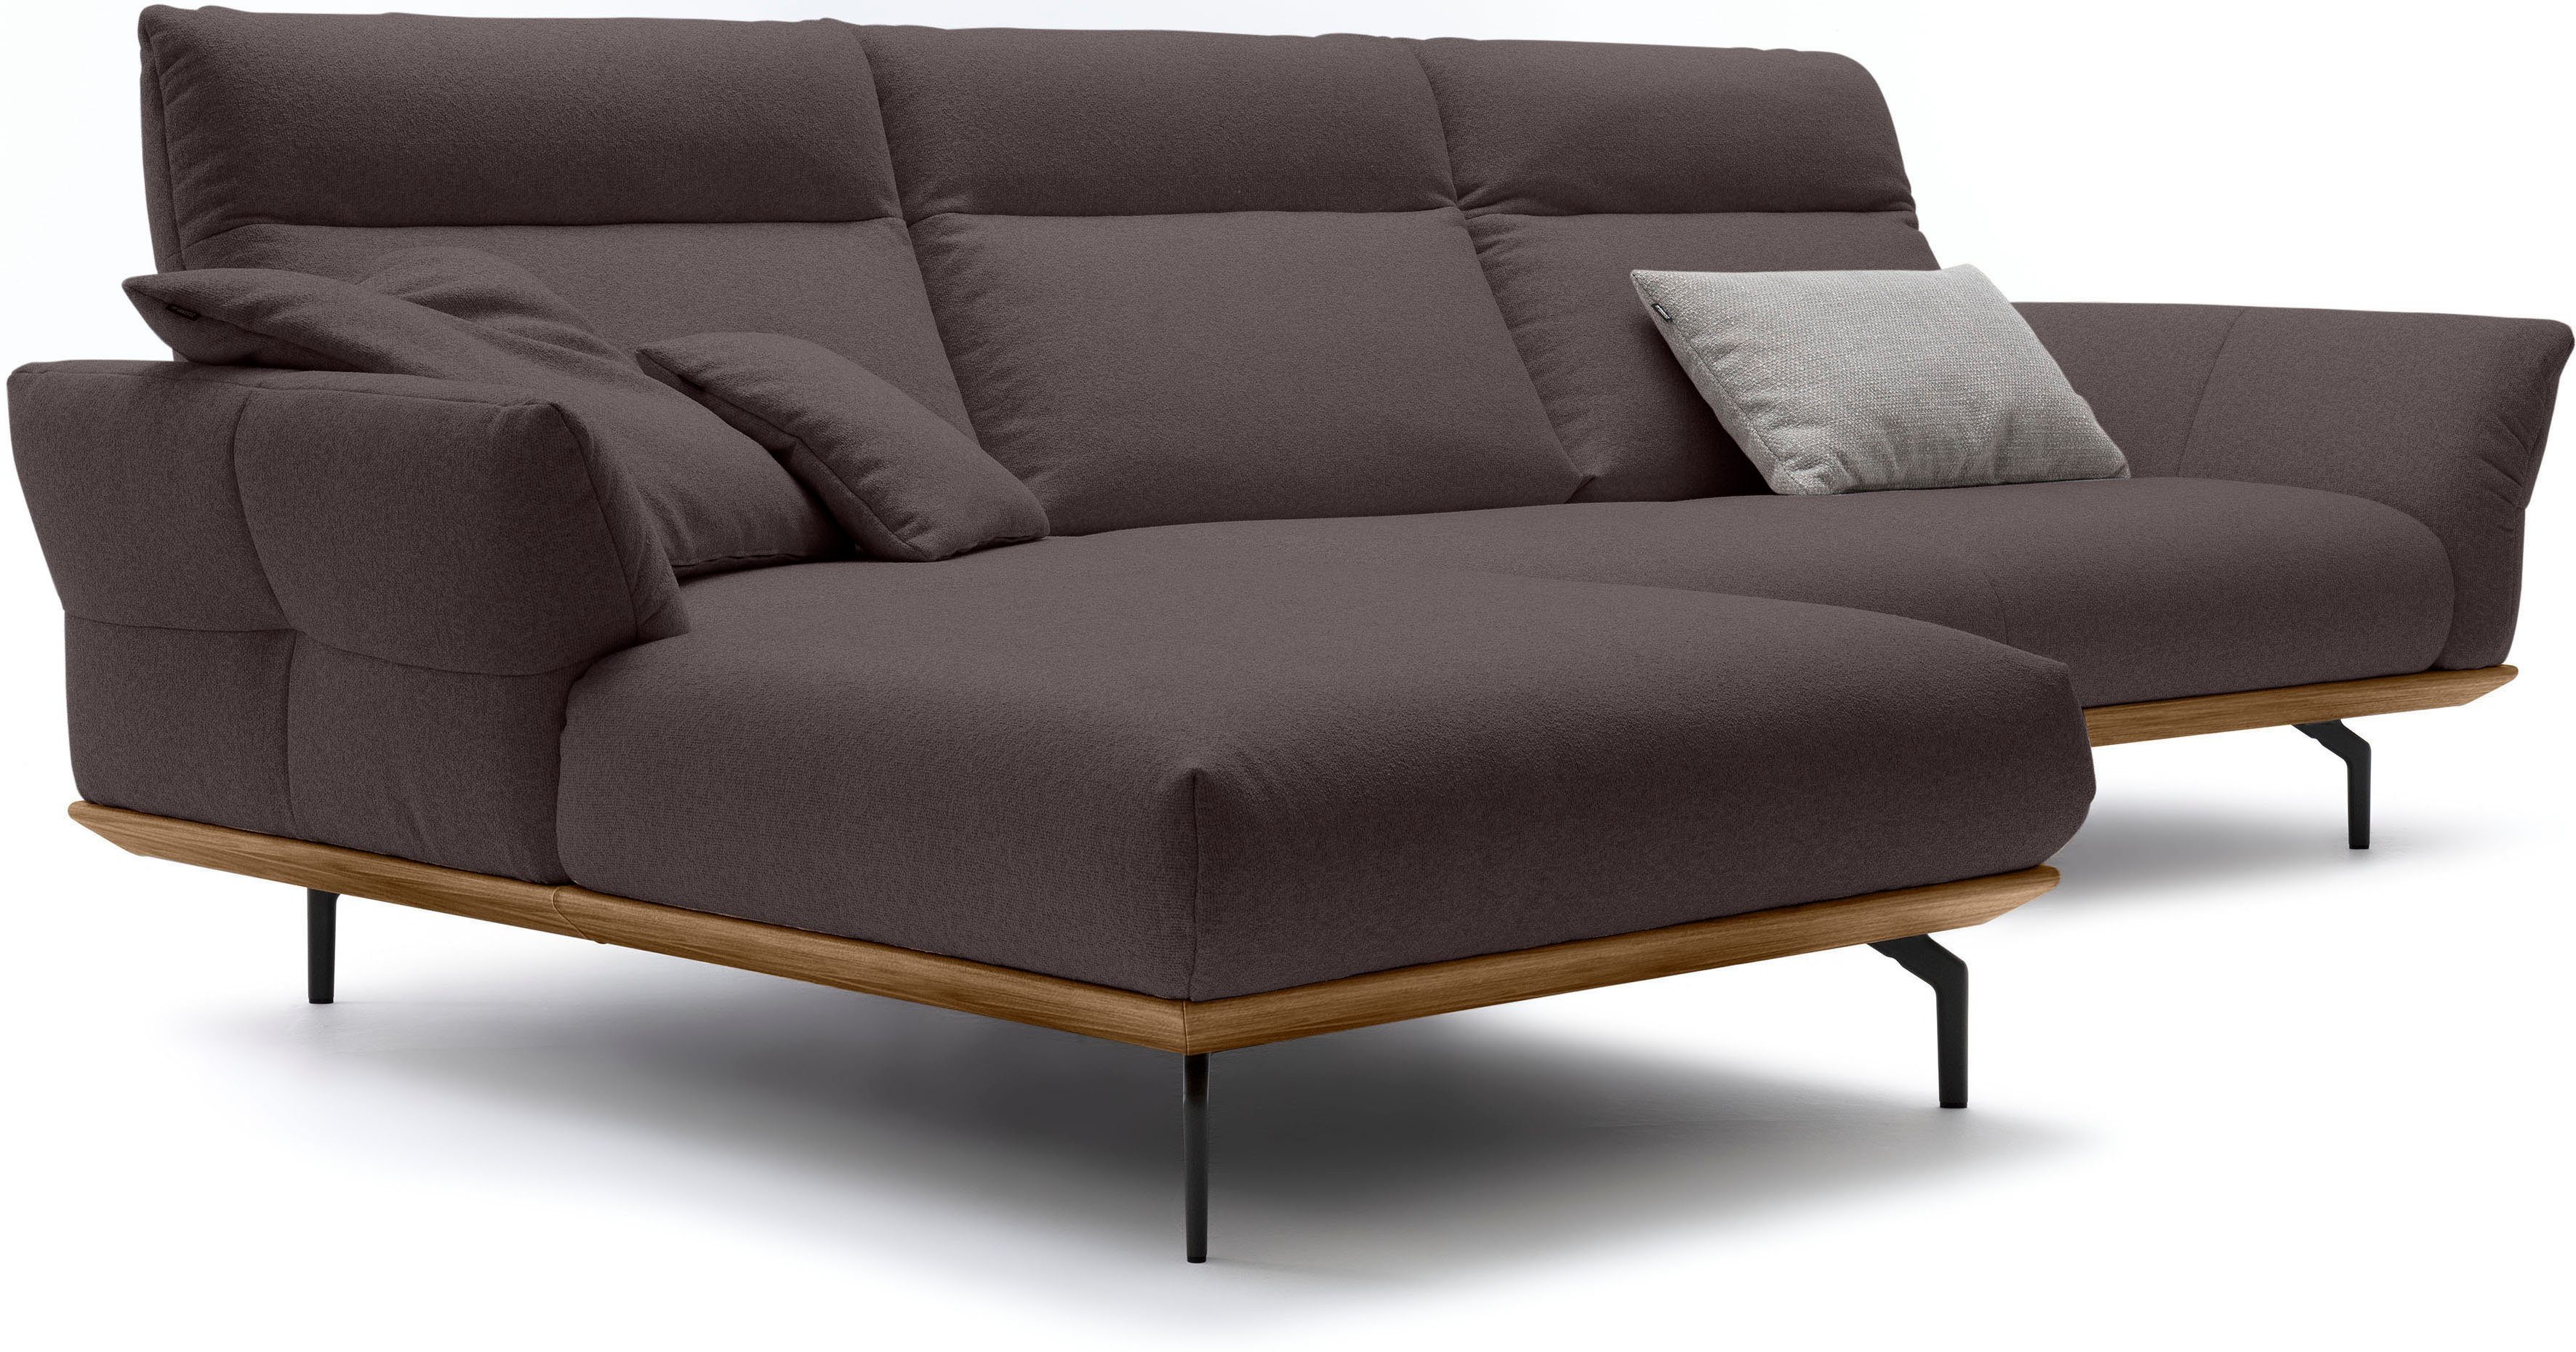 hülsta sofa Breite hs.460, 318 Umbragrau, Ecksofa cm in Winkelfüße in Nussbaum, Sockel